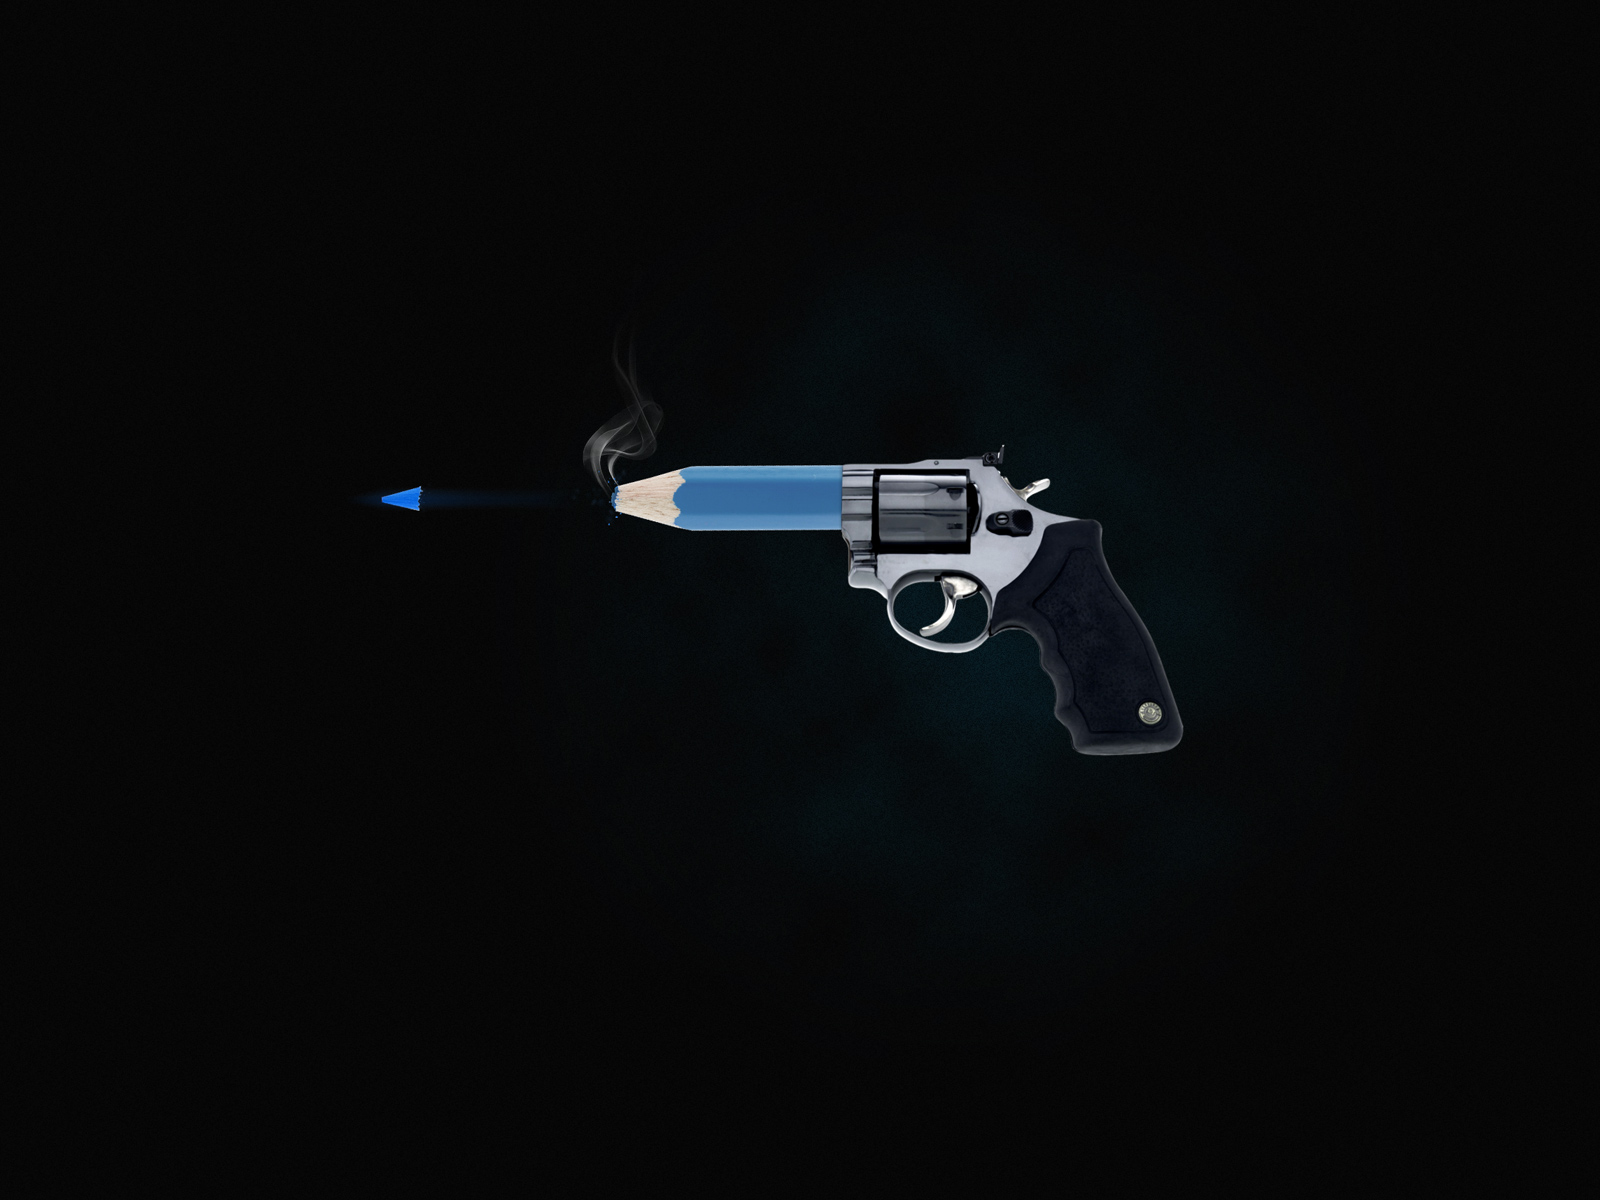 Artistic Gun HD Wallpaper | Background Image